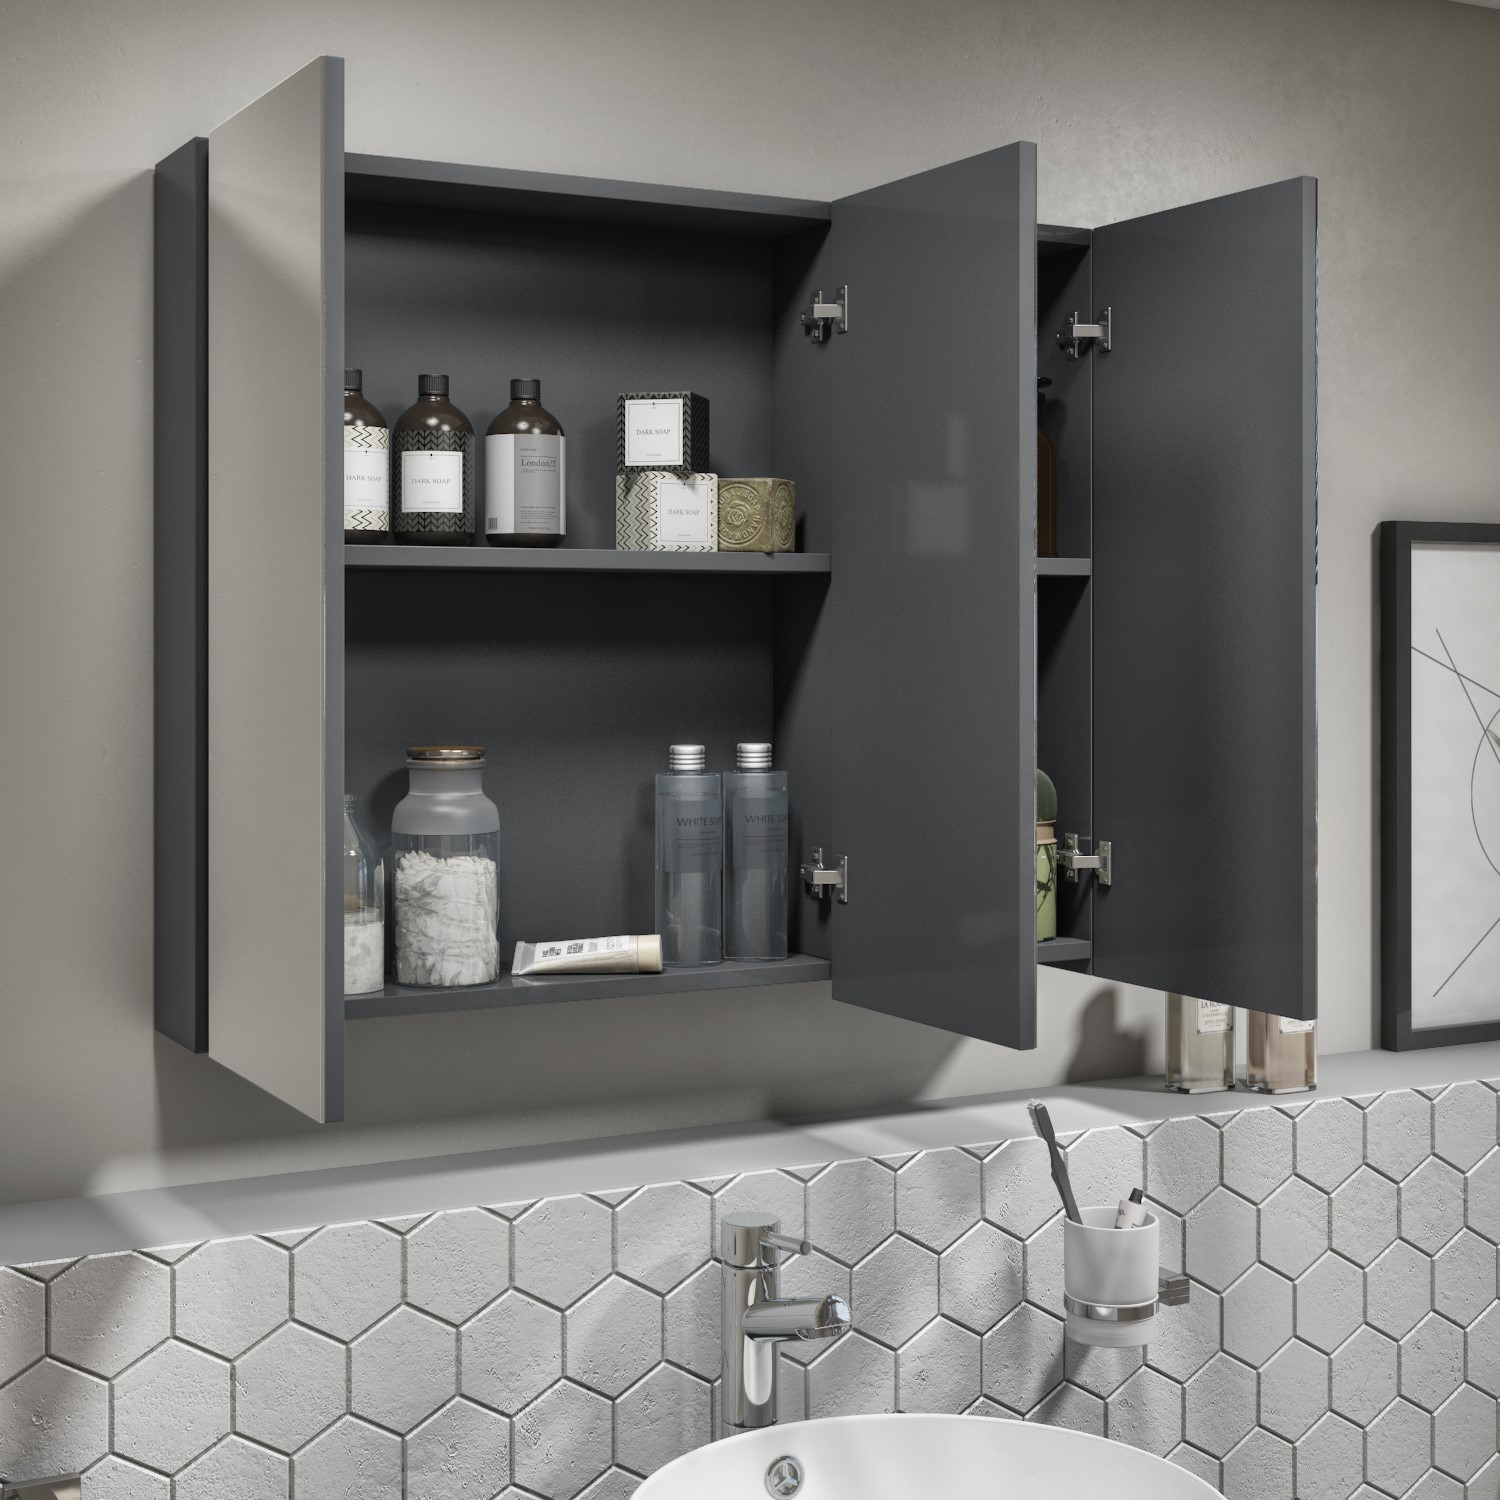 Mirrored 3 Door Bathroom Cabinet, Bathroom Wall Mounted Cabinet With Mirror